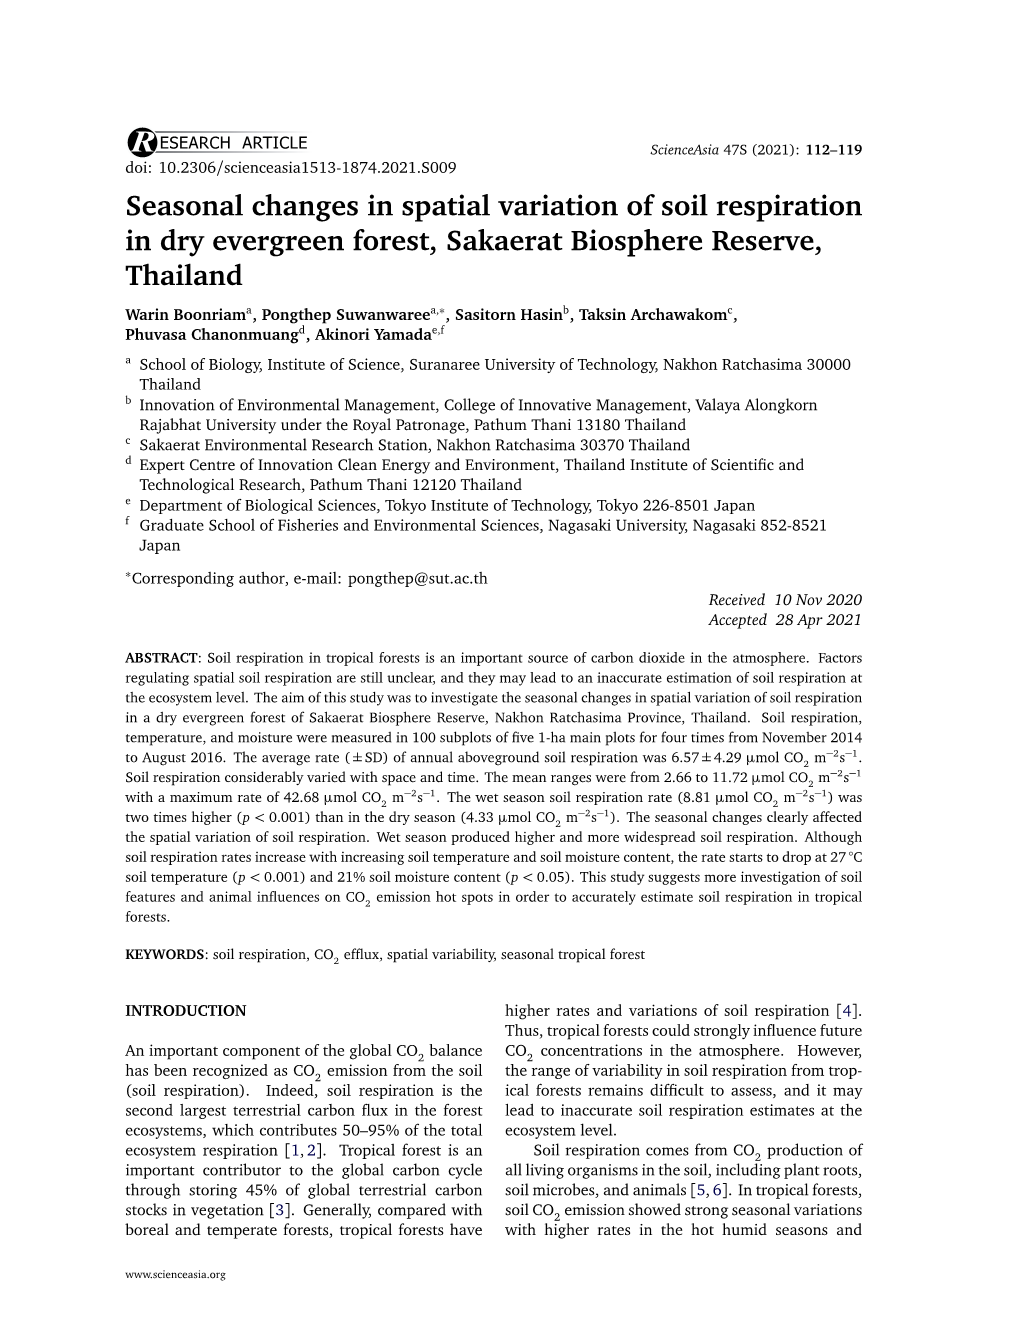 Seasonal Changes in Spatial Variation of Soil Respiration in Dry Evergreen Forest, Sakaerat Biosphere Reserve, Thailand